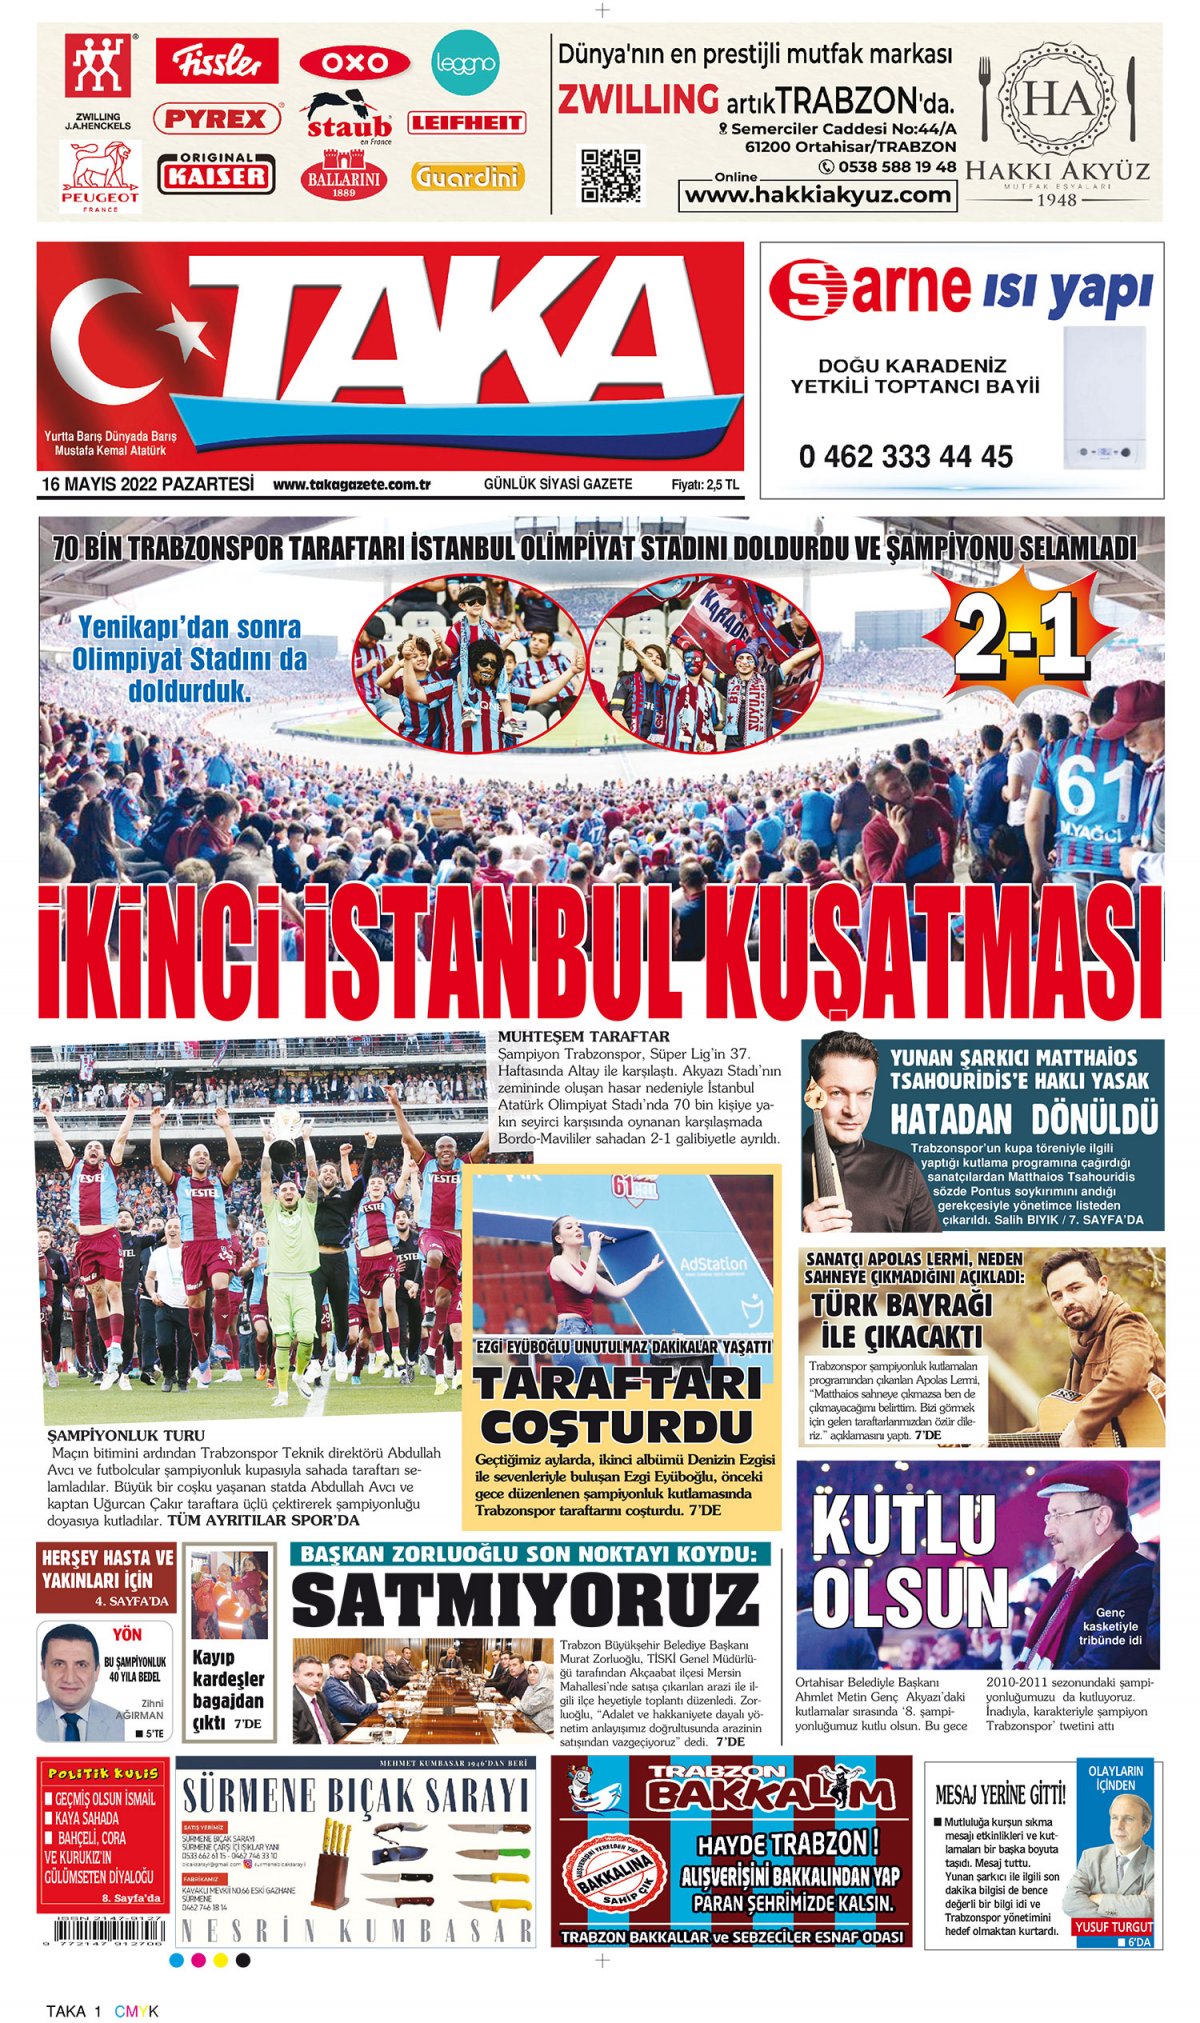 Taka Gazete - 16.05.2022 Manşeti